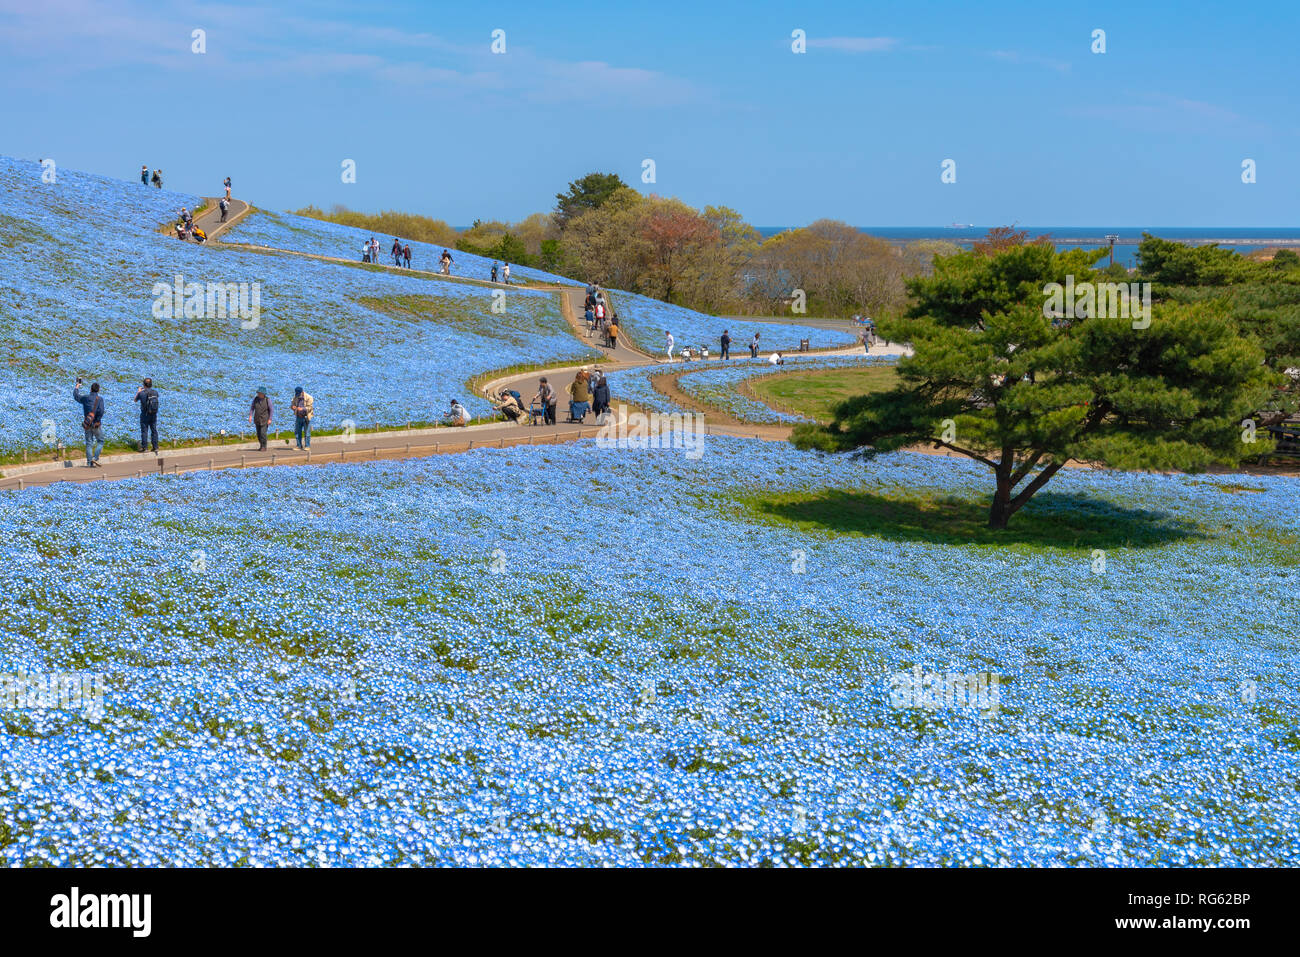 Nemophila (baby blue eyes flowers) flower field, blue flower carpet Stock Photo